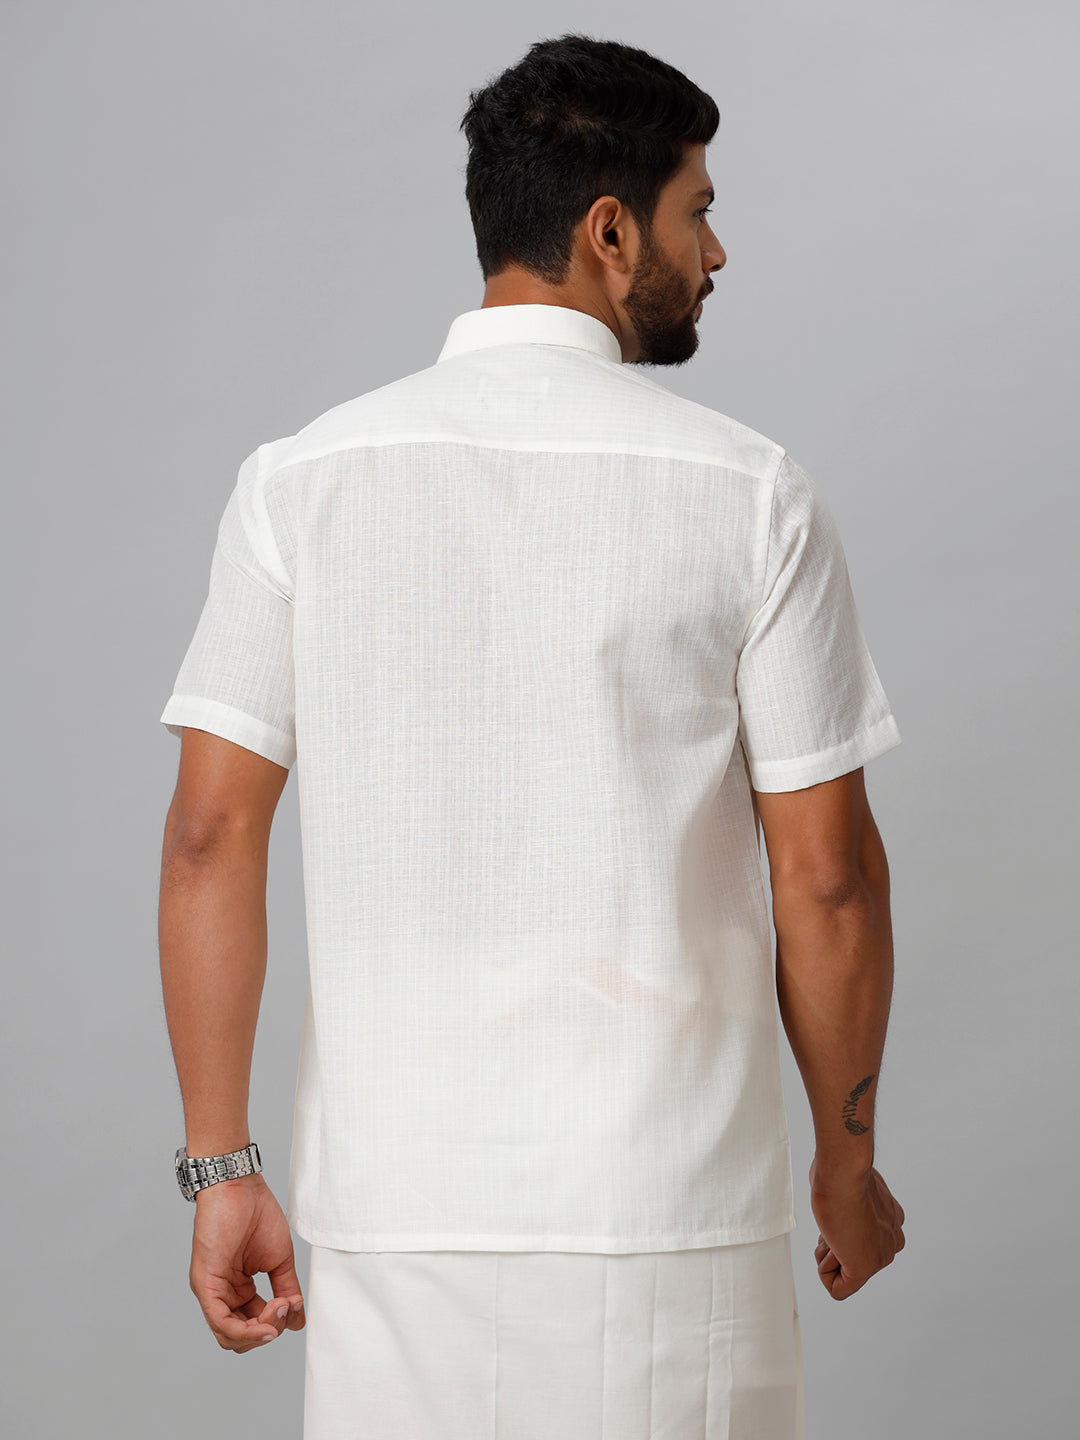 Mens Cotton Cream Shirt Half Sleeves Celebrity 2-Back view